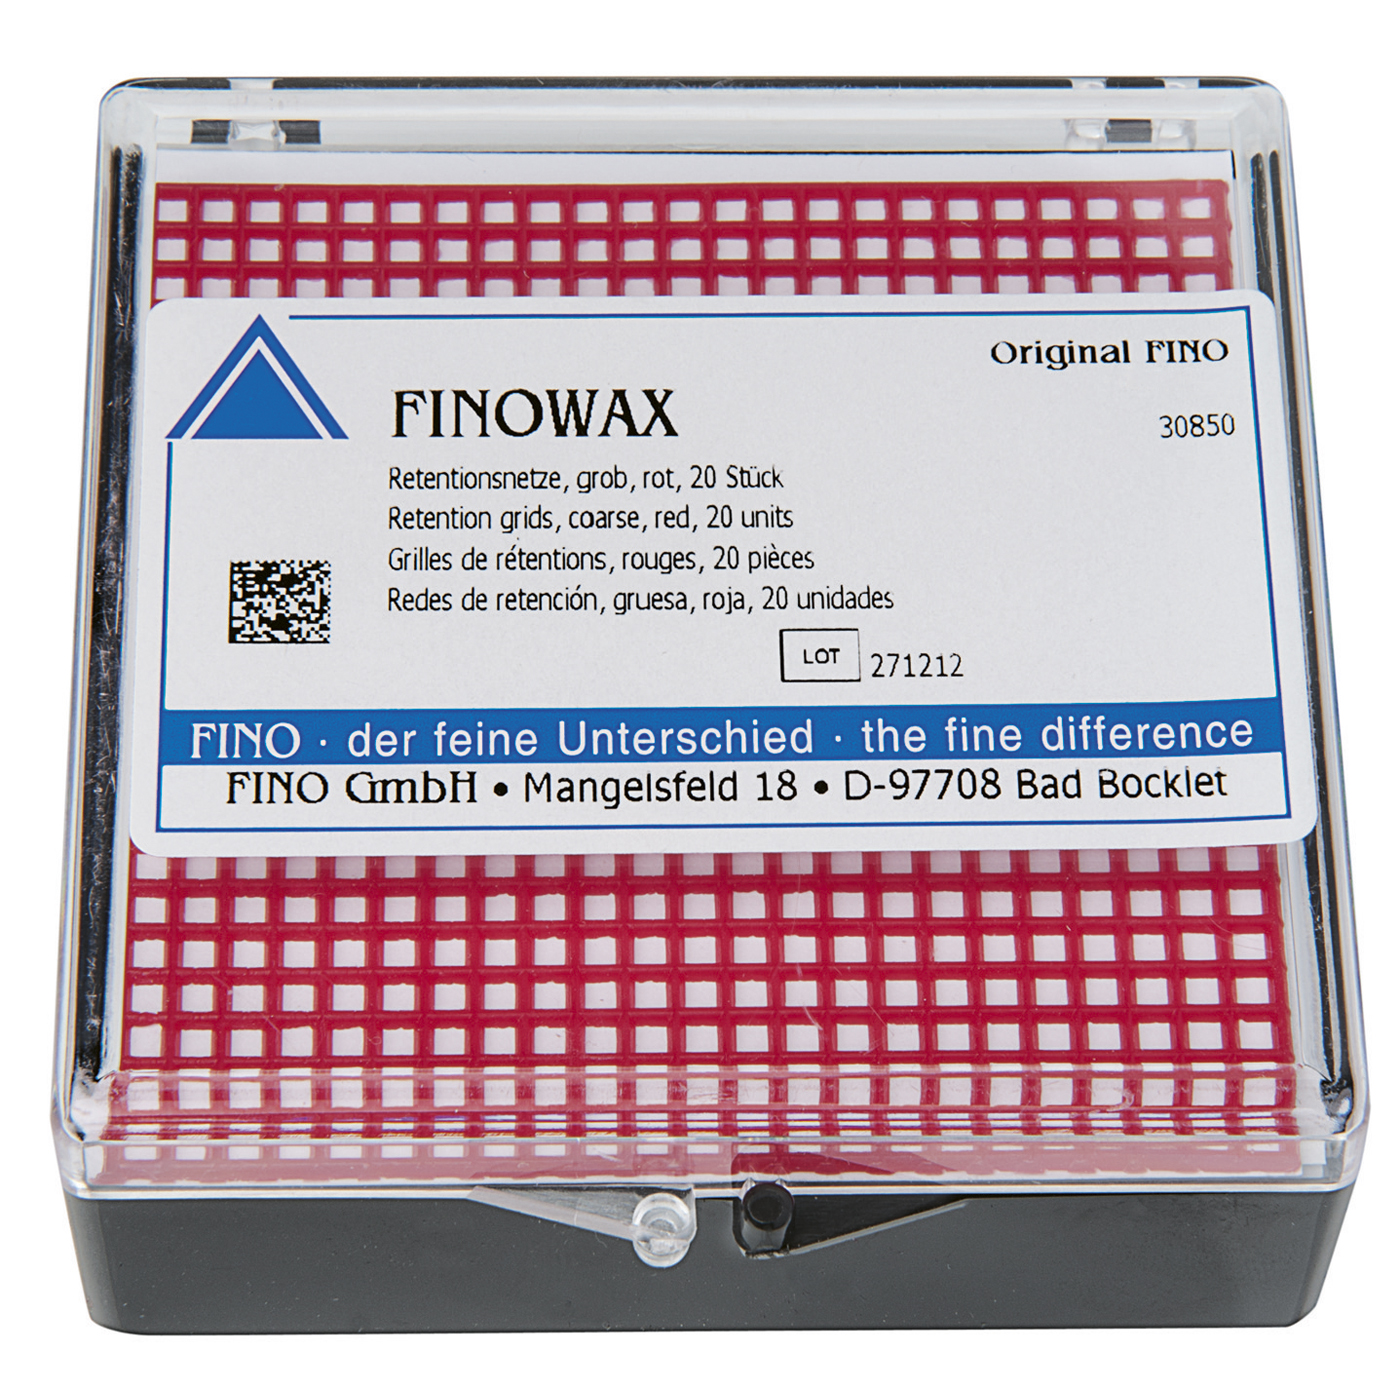 FINOWAX Preformed Wax Patterns, Retention Grids, Coarse - 20 pieces